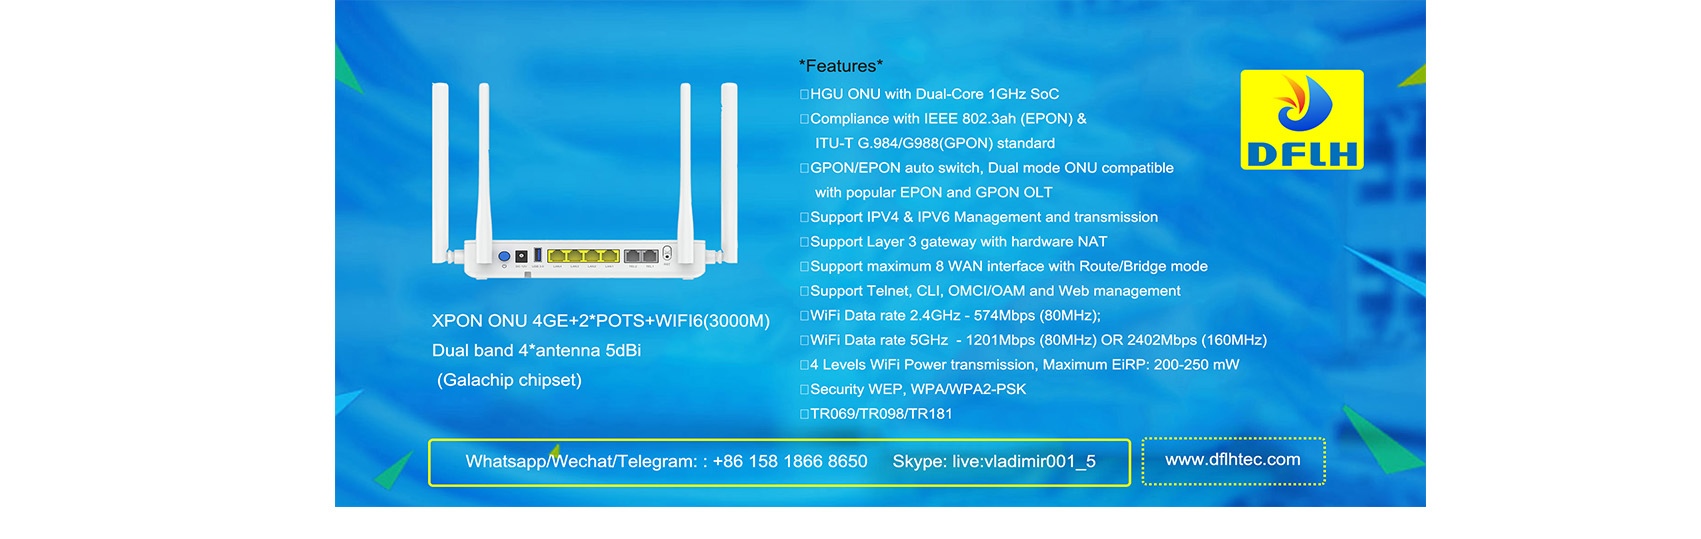 XPON ONU 4*GE+1*POTS+WiFi6 (1800M )  dual band